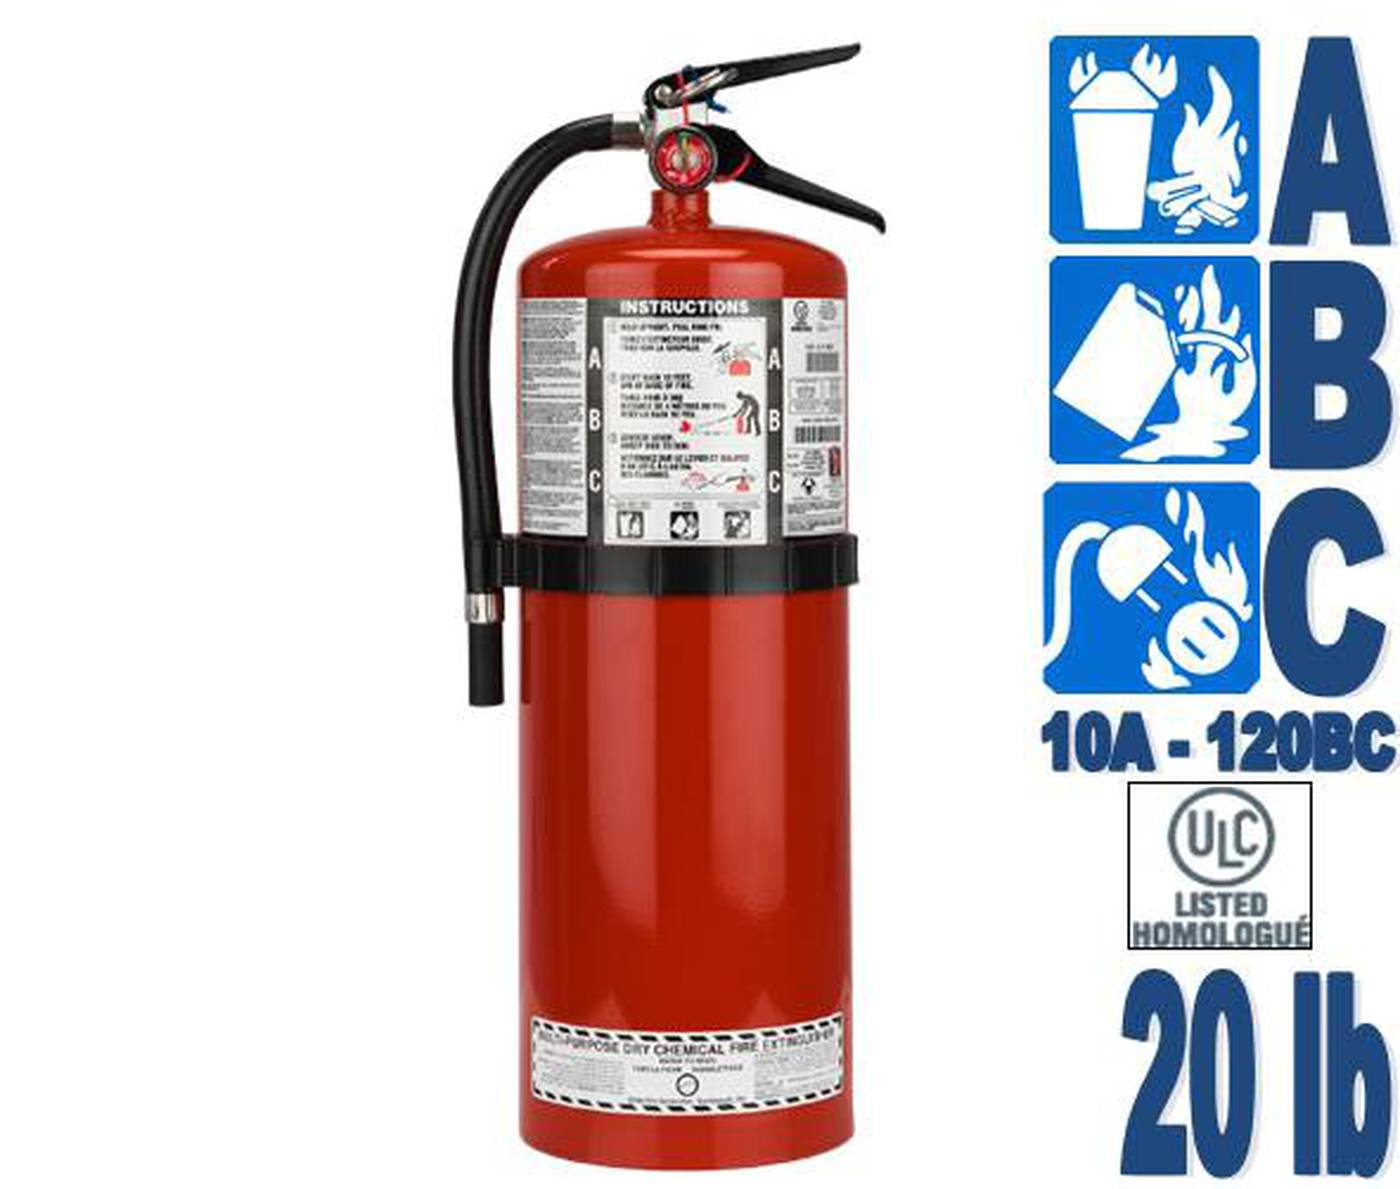 Fire extinguisher 20 lbs type ABC, ULC 